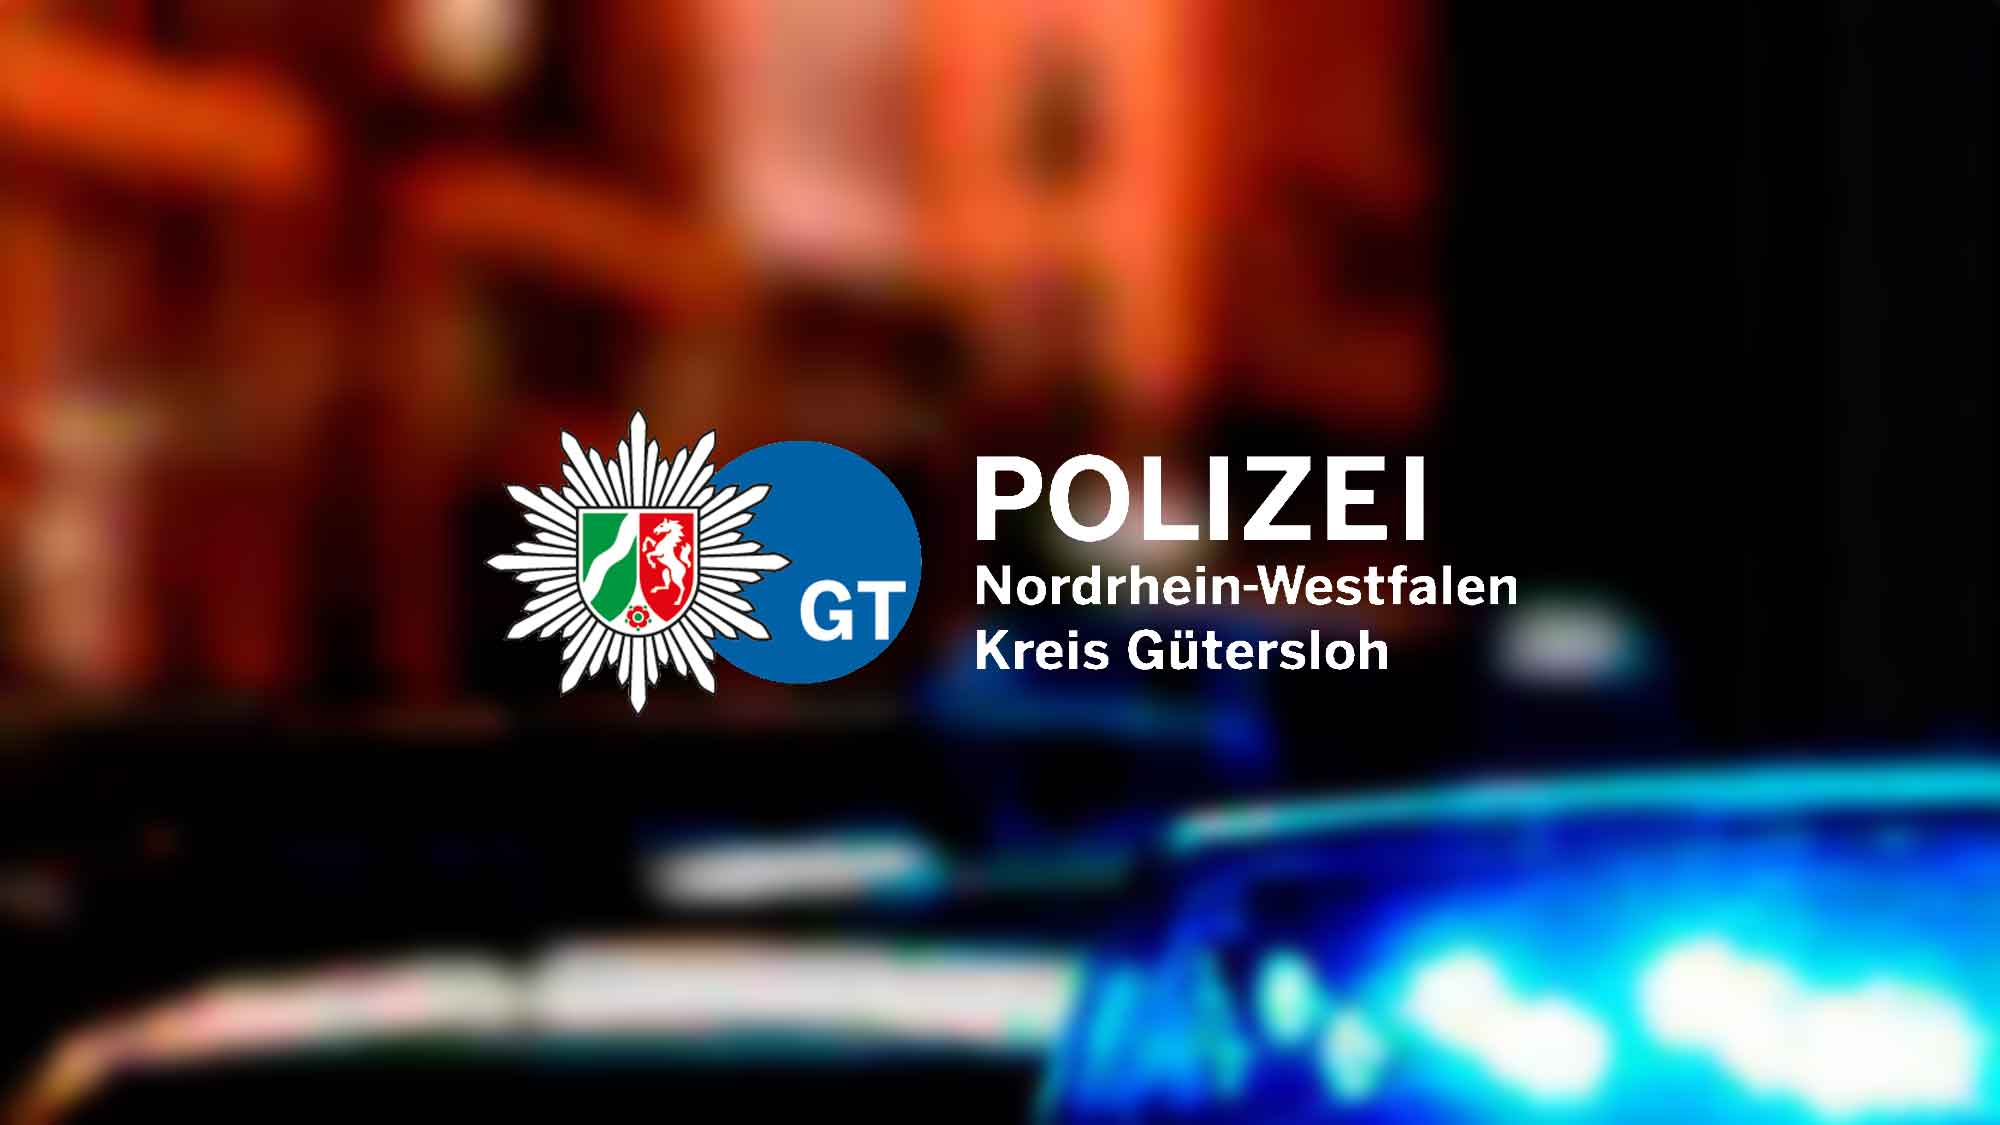 Polizei Gütersloh: unbelehrbarer Ladendieb in Haft